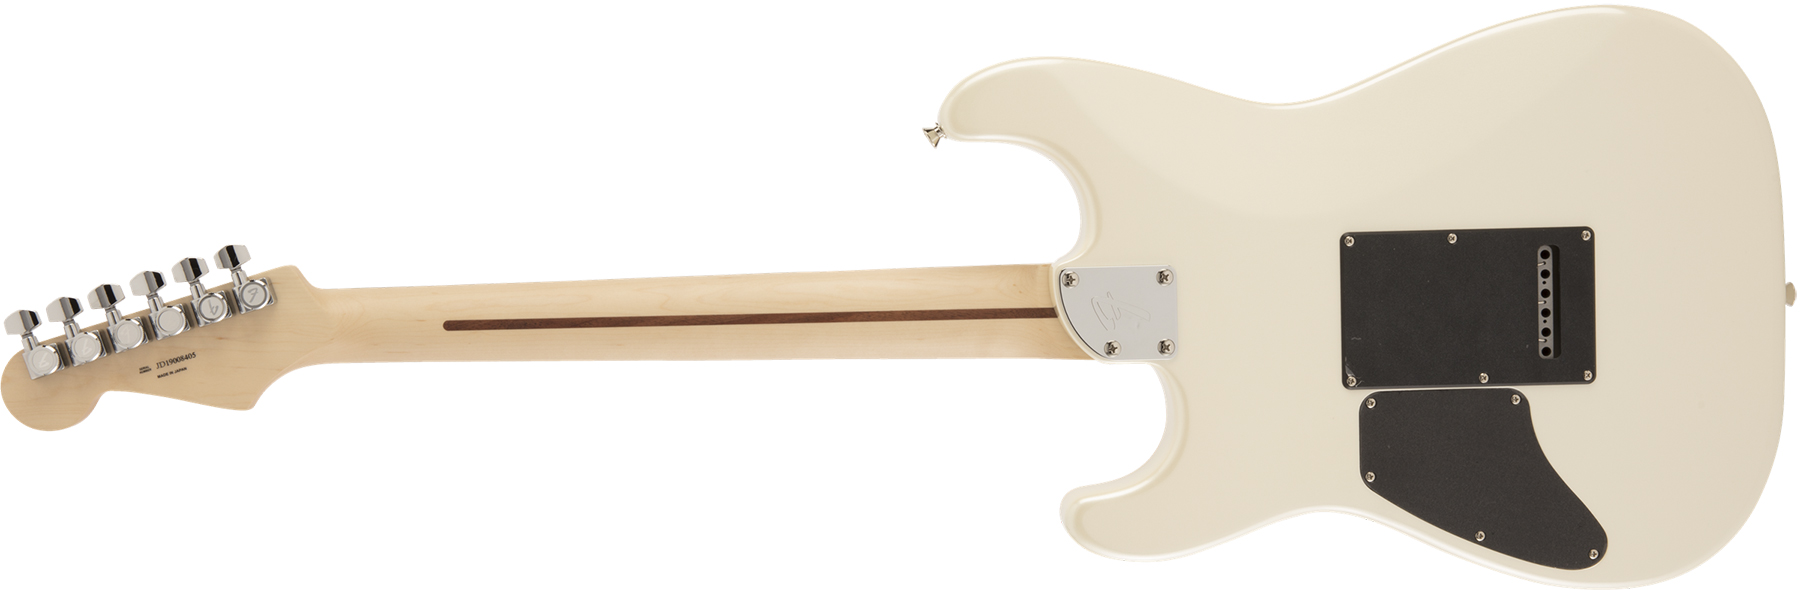 Fender Strat Modern Hh Japon Trem Rw - Olympic Pearl - Guitarra eléctrica con forma de str. - Variation 1